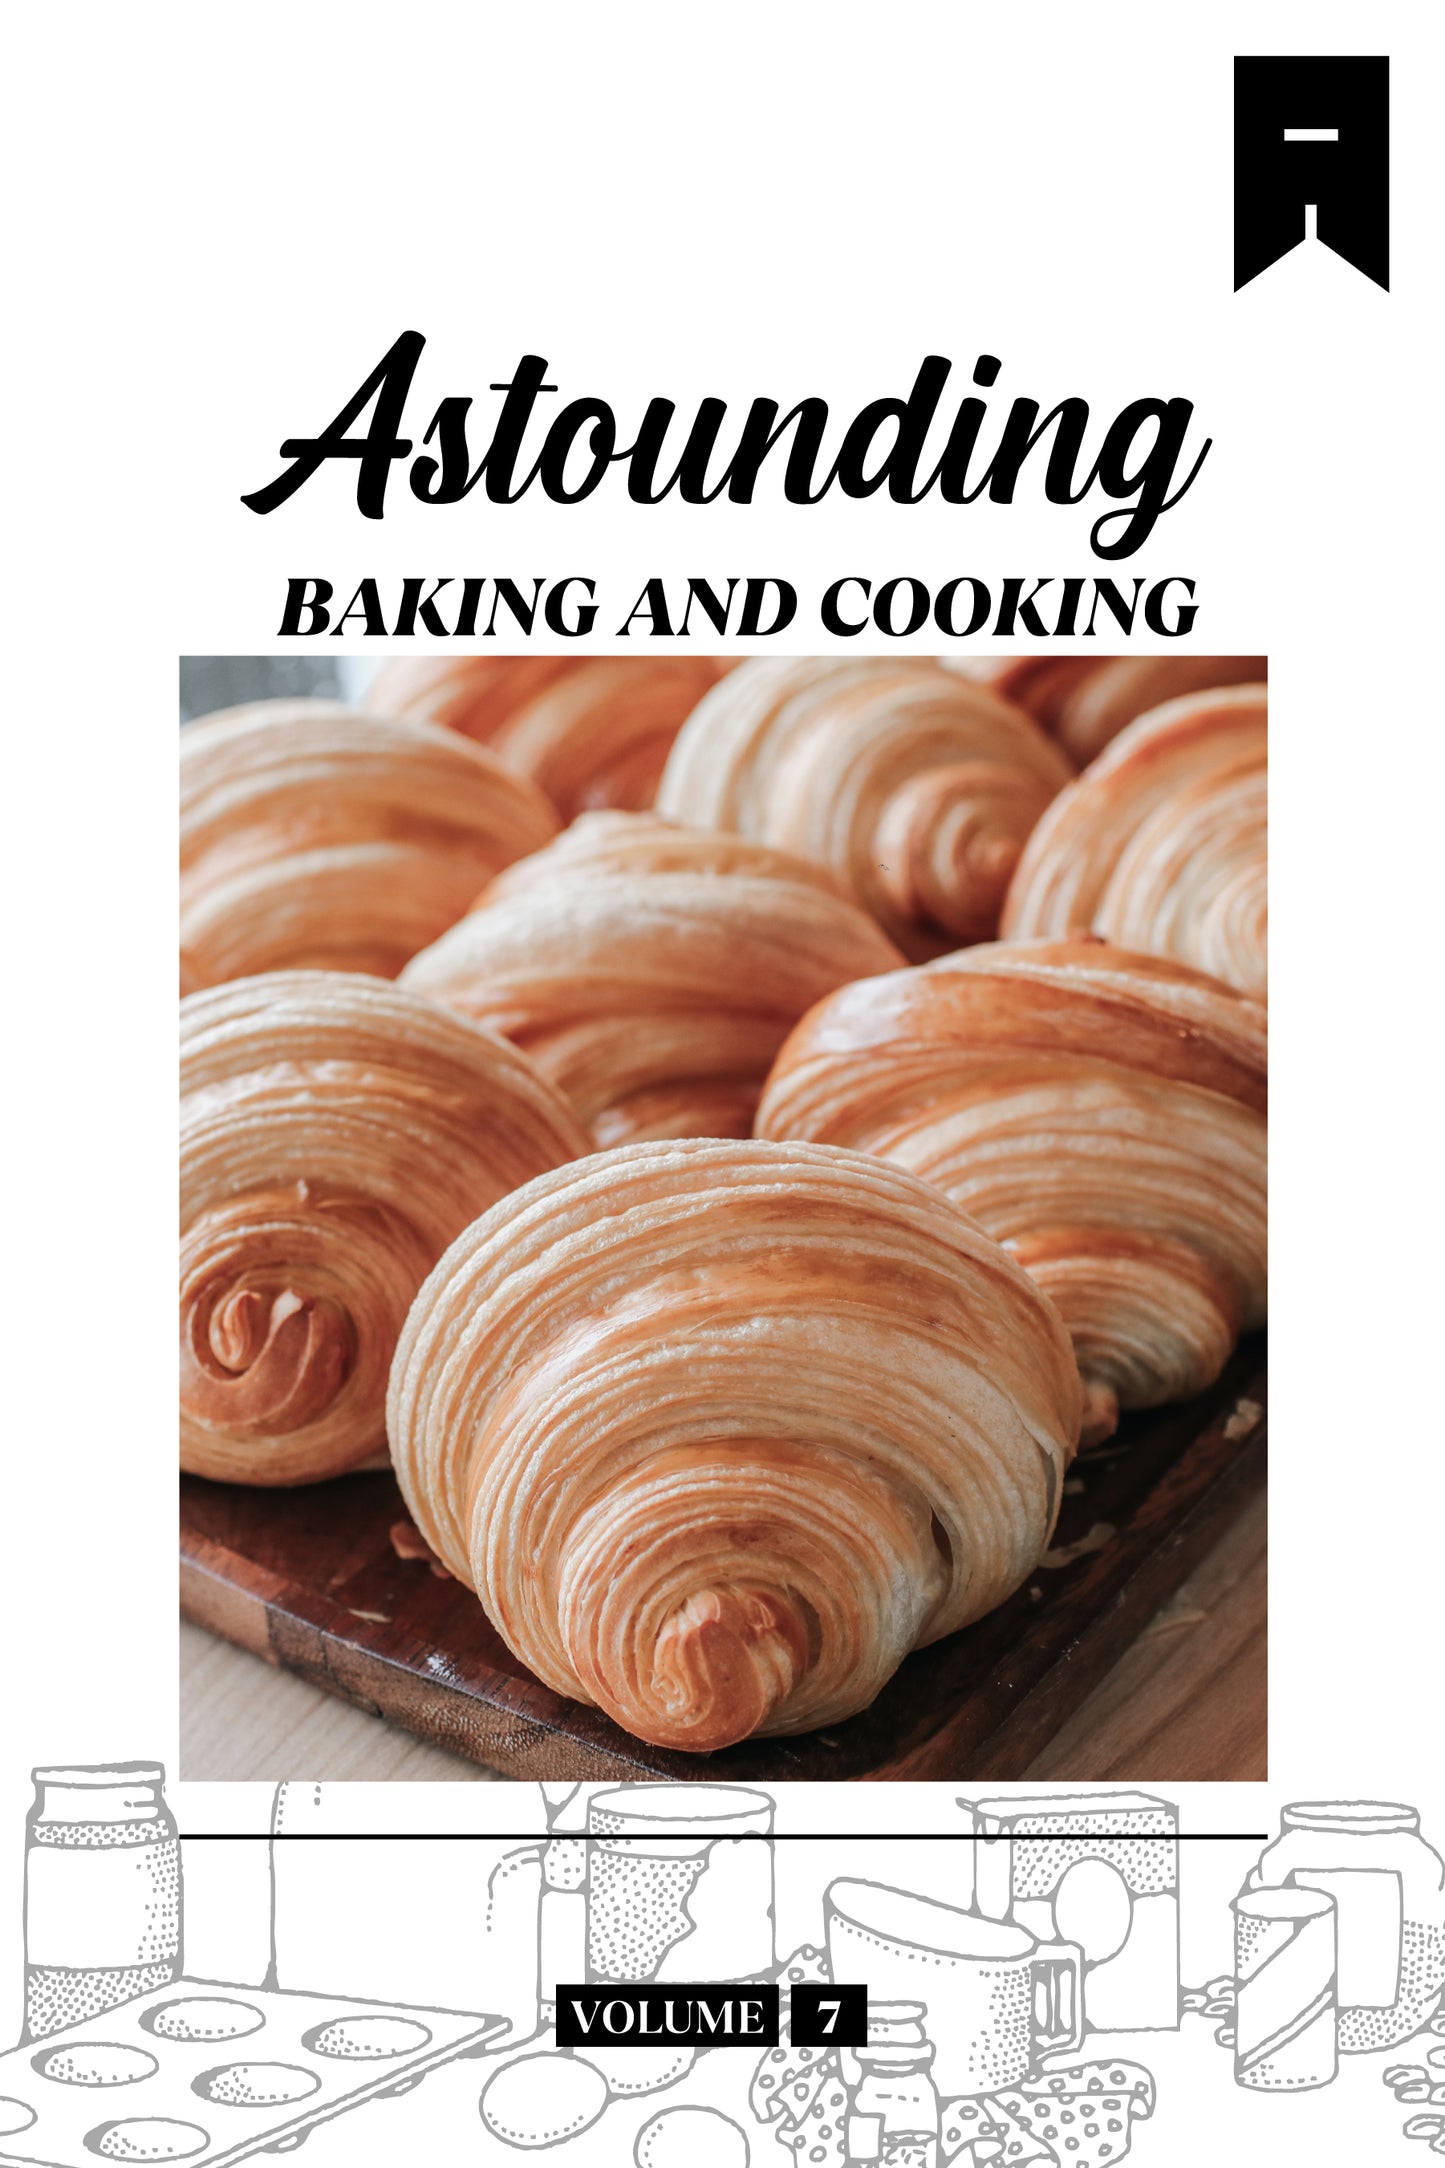 Astounding Baking (Volume 7) - Physical Book